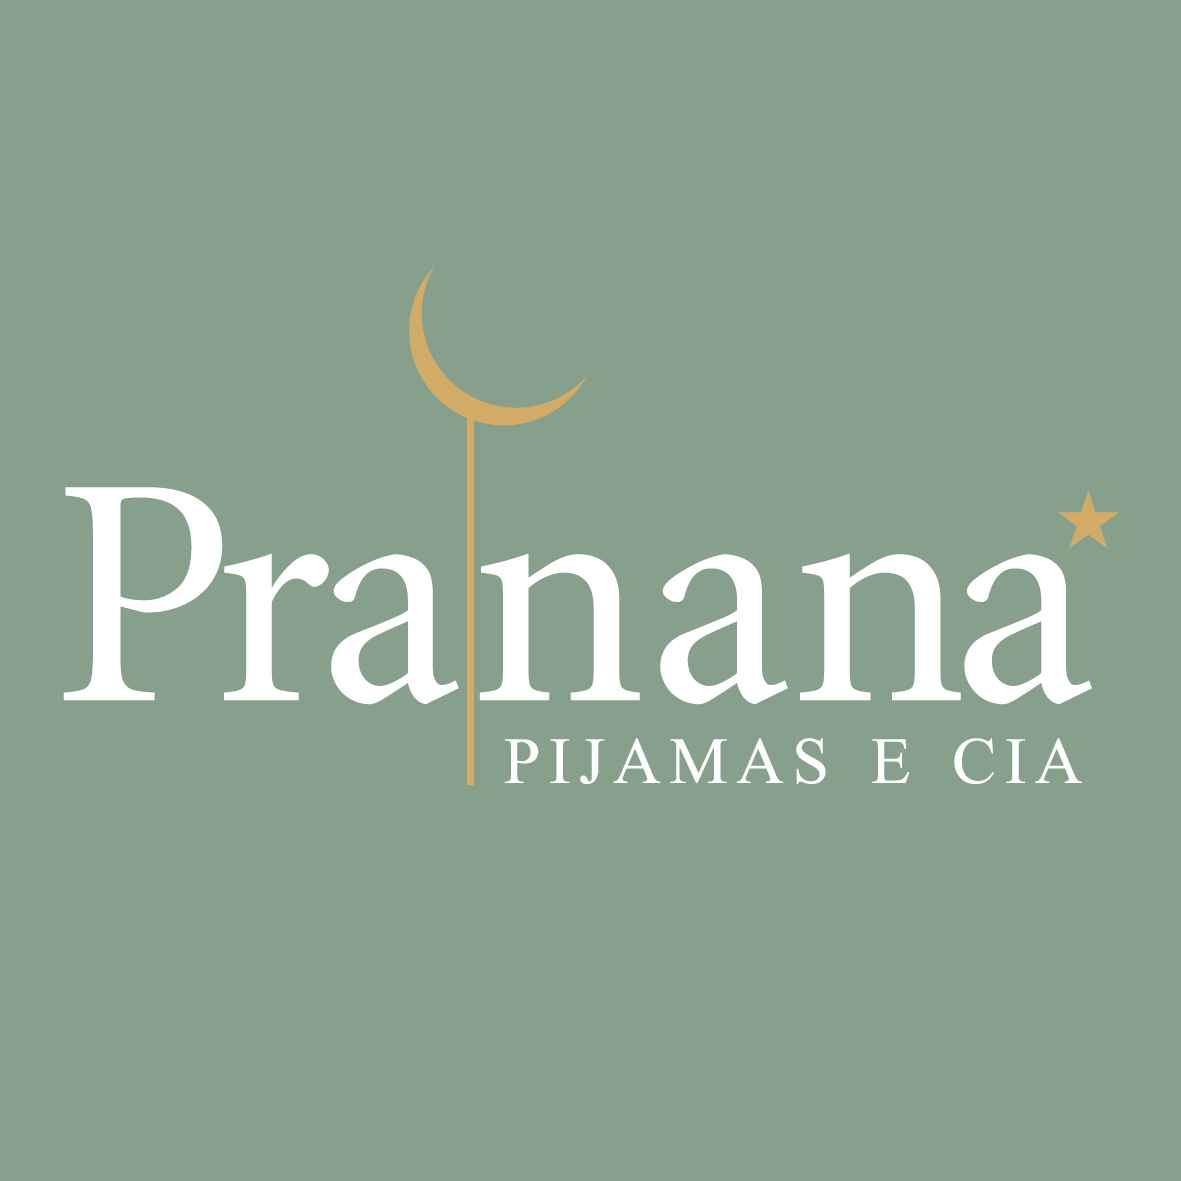 Pranana